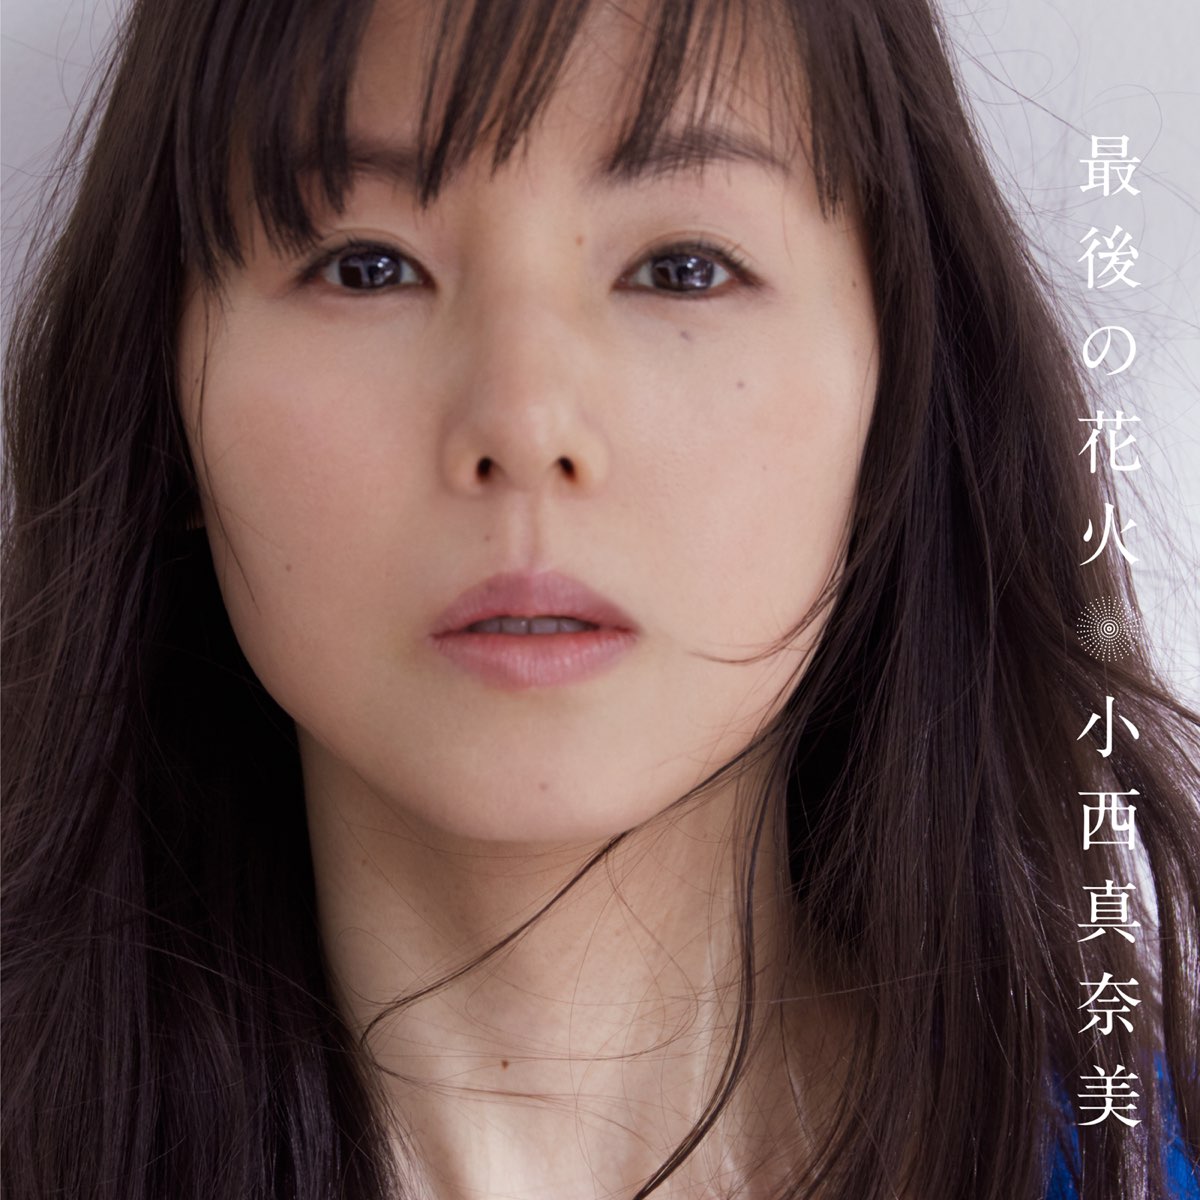 Saigo No Hanabi Single By Manami Konishi On Apple Music